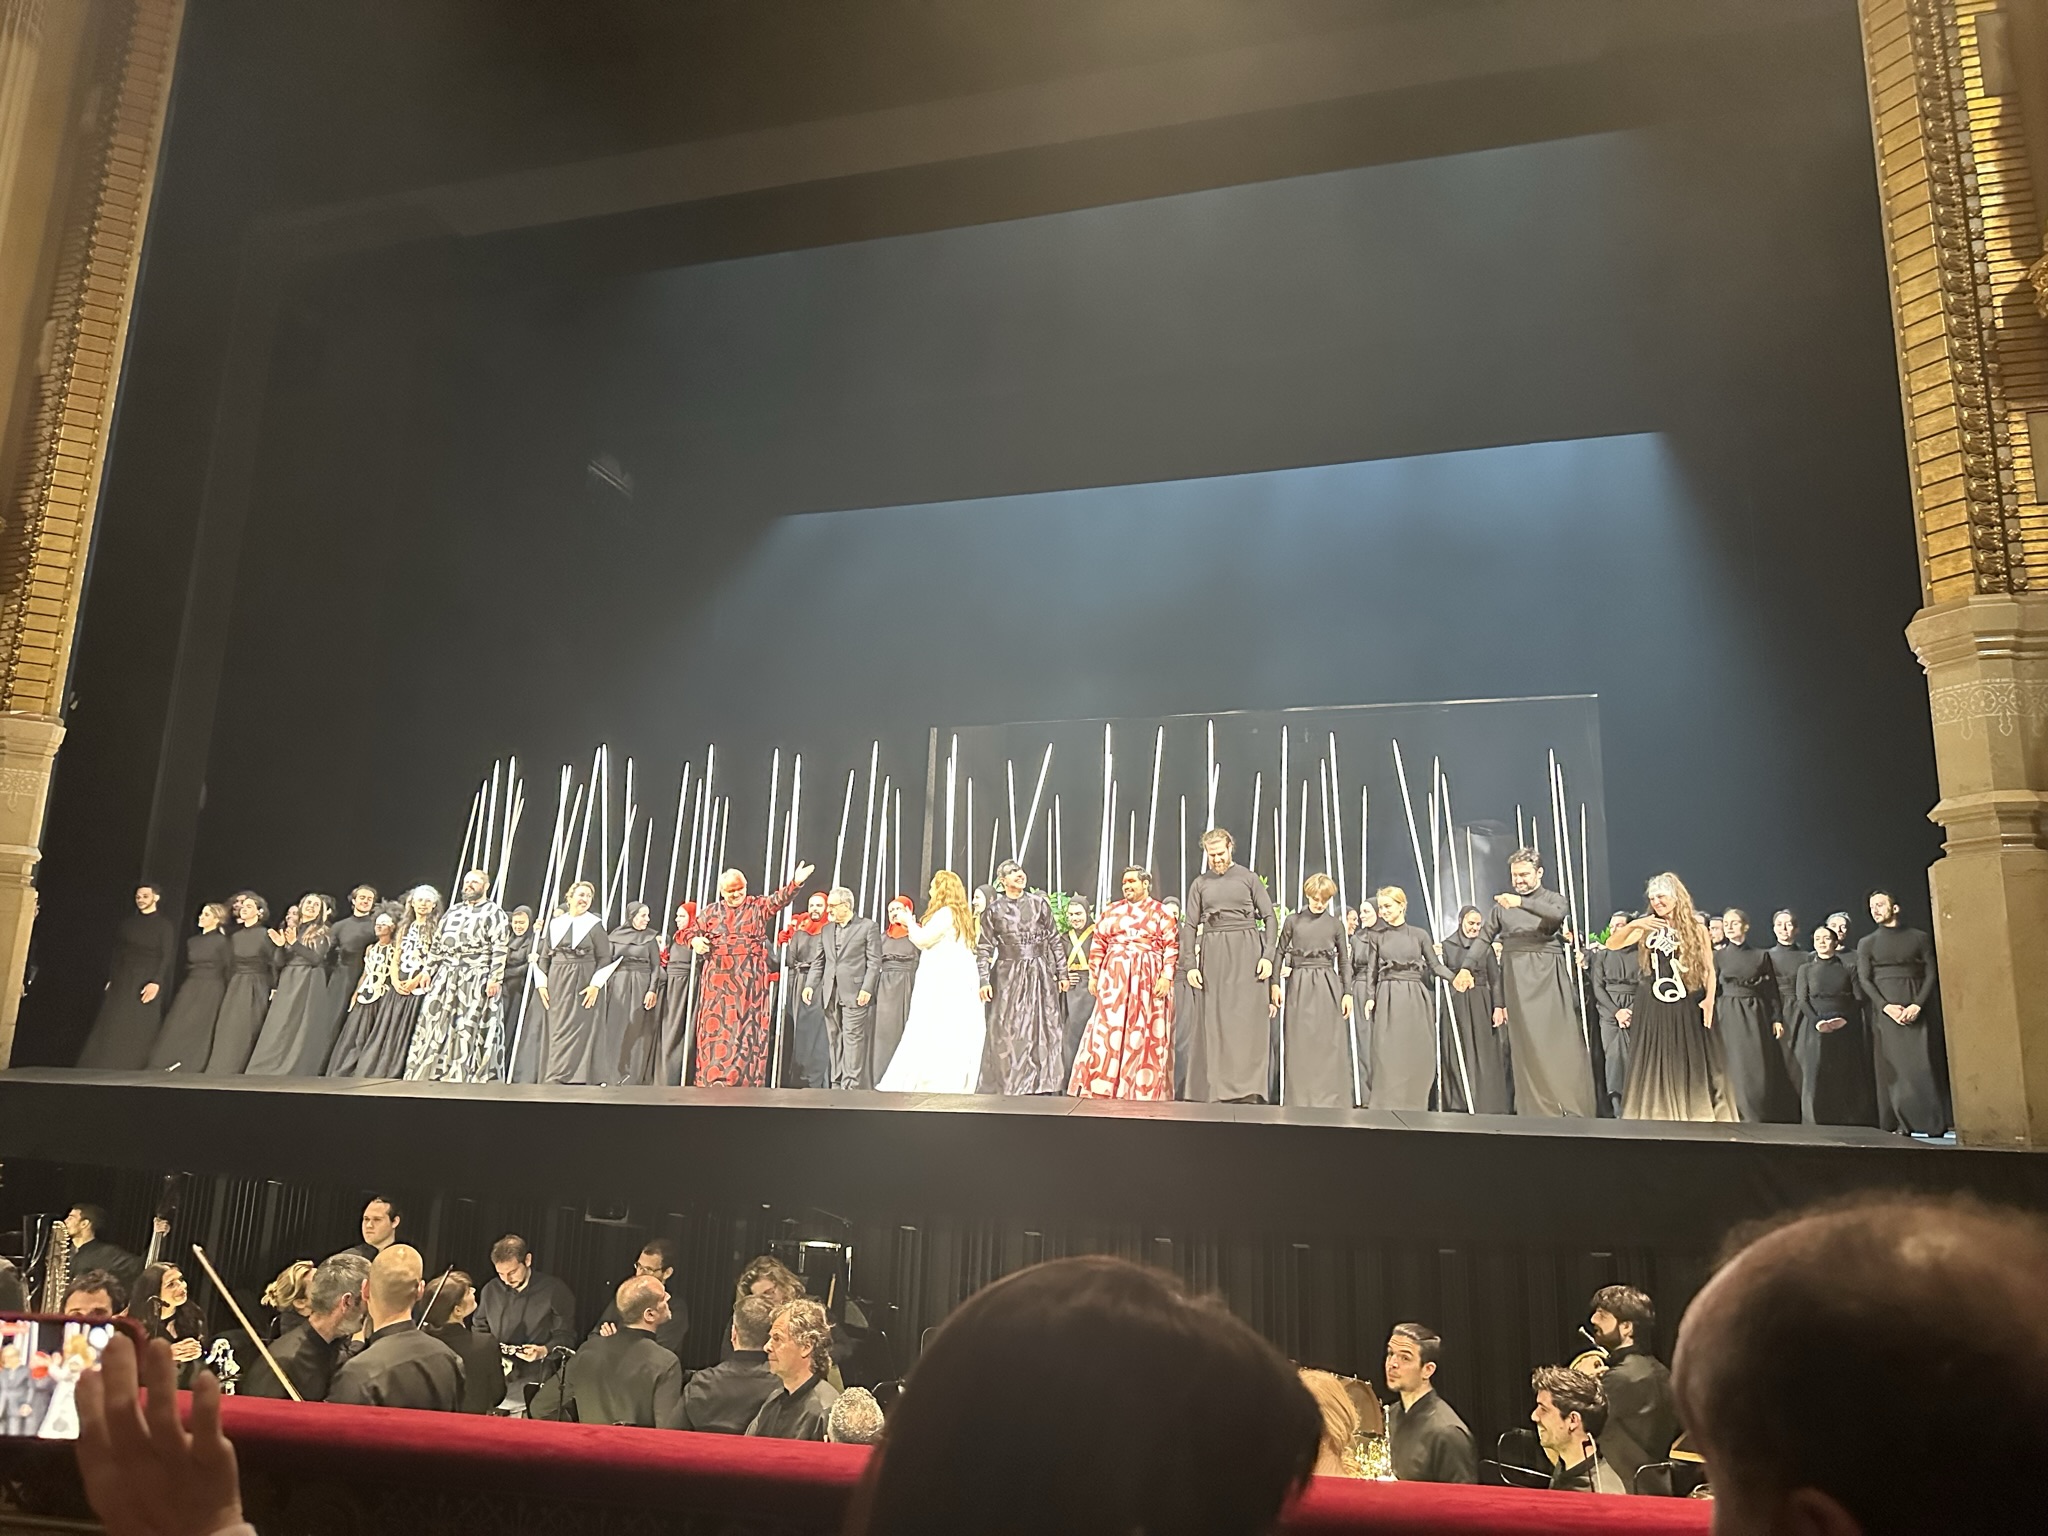 MacBeth - Musical performance in Gran Teatre del Liceu